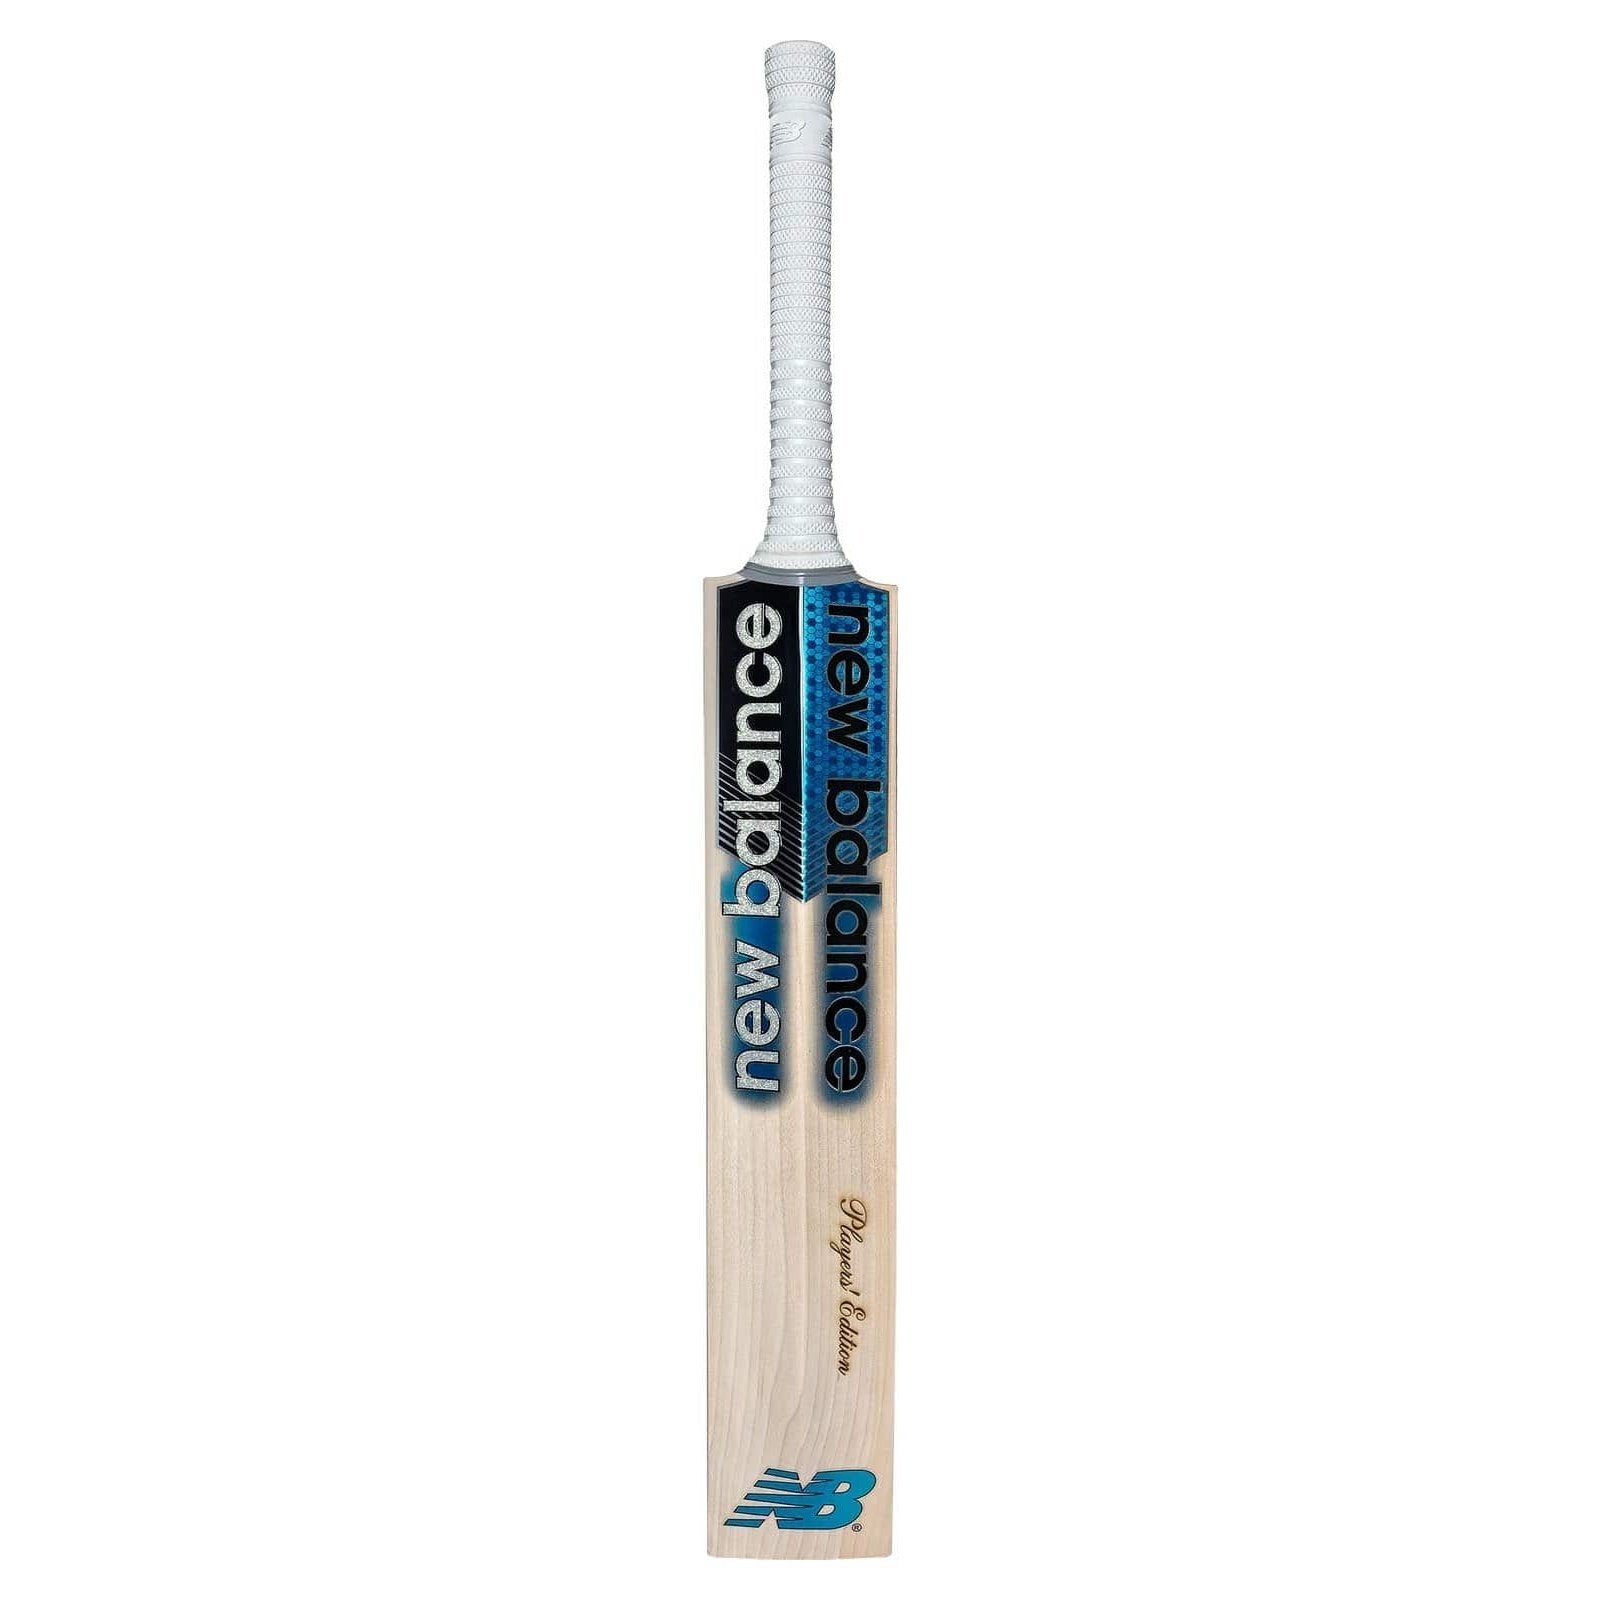 New Balance Cricket Bats Short Hand New Balance DC 1080 Players Edition Cricket Bat